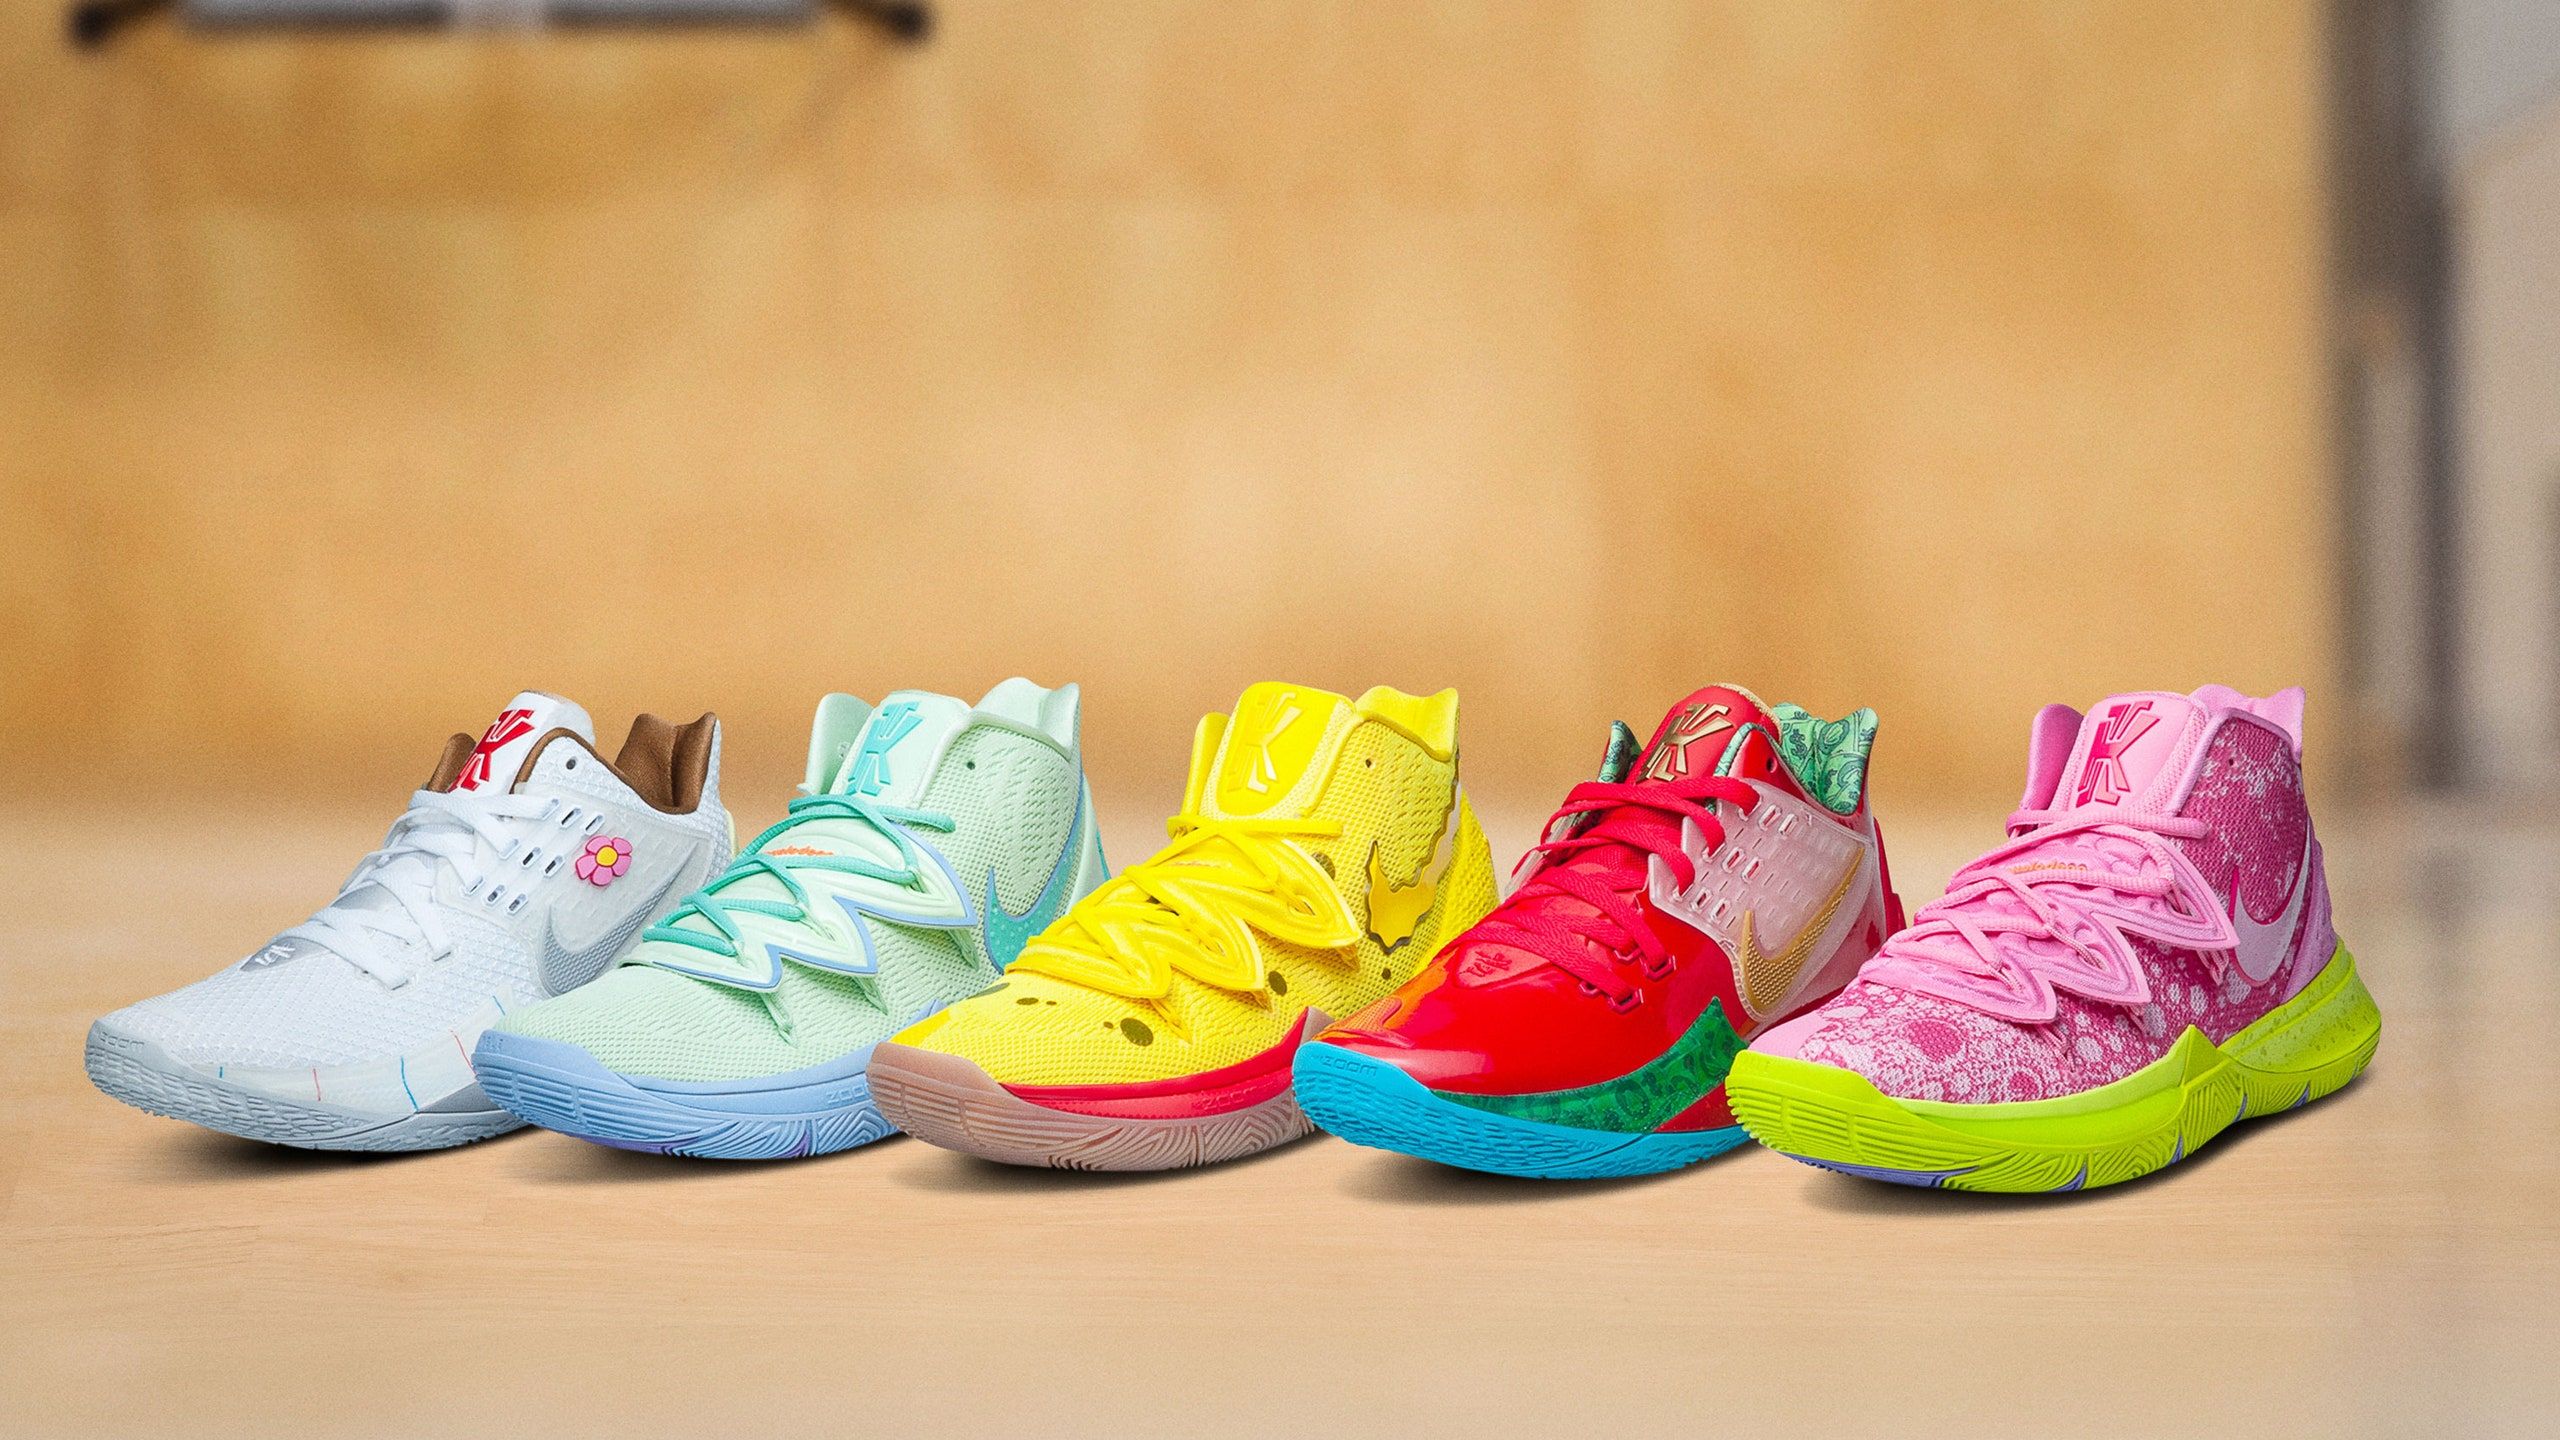 Kyrie Irving Unveiled His “SpongeBob SquarePants” Line of Nike Sneakers